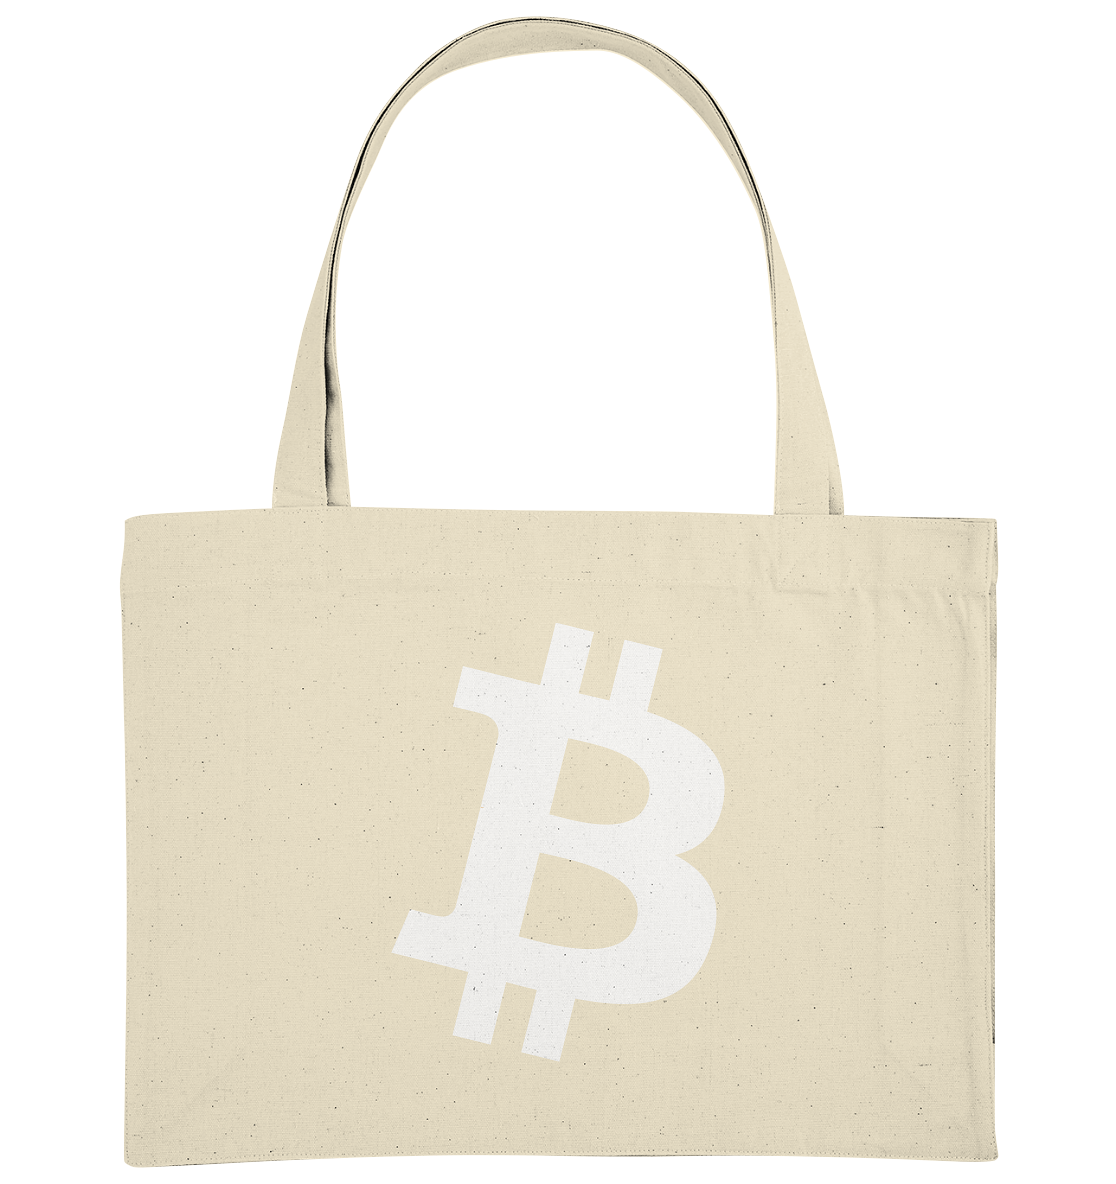 Bitcoin "simple B white" - Organic Shopping-Bag